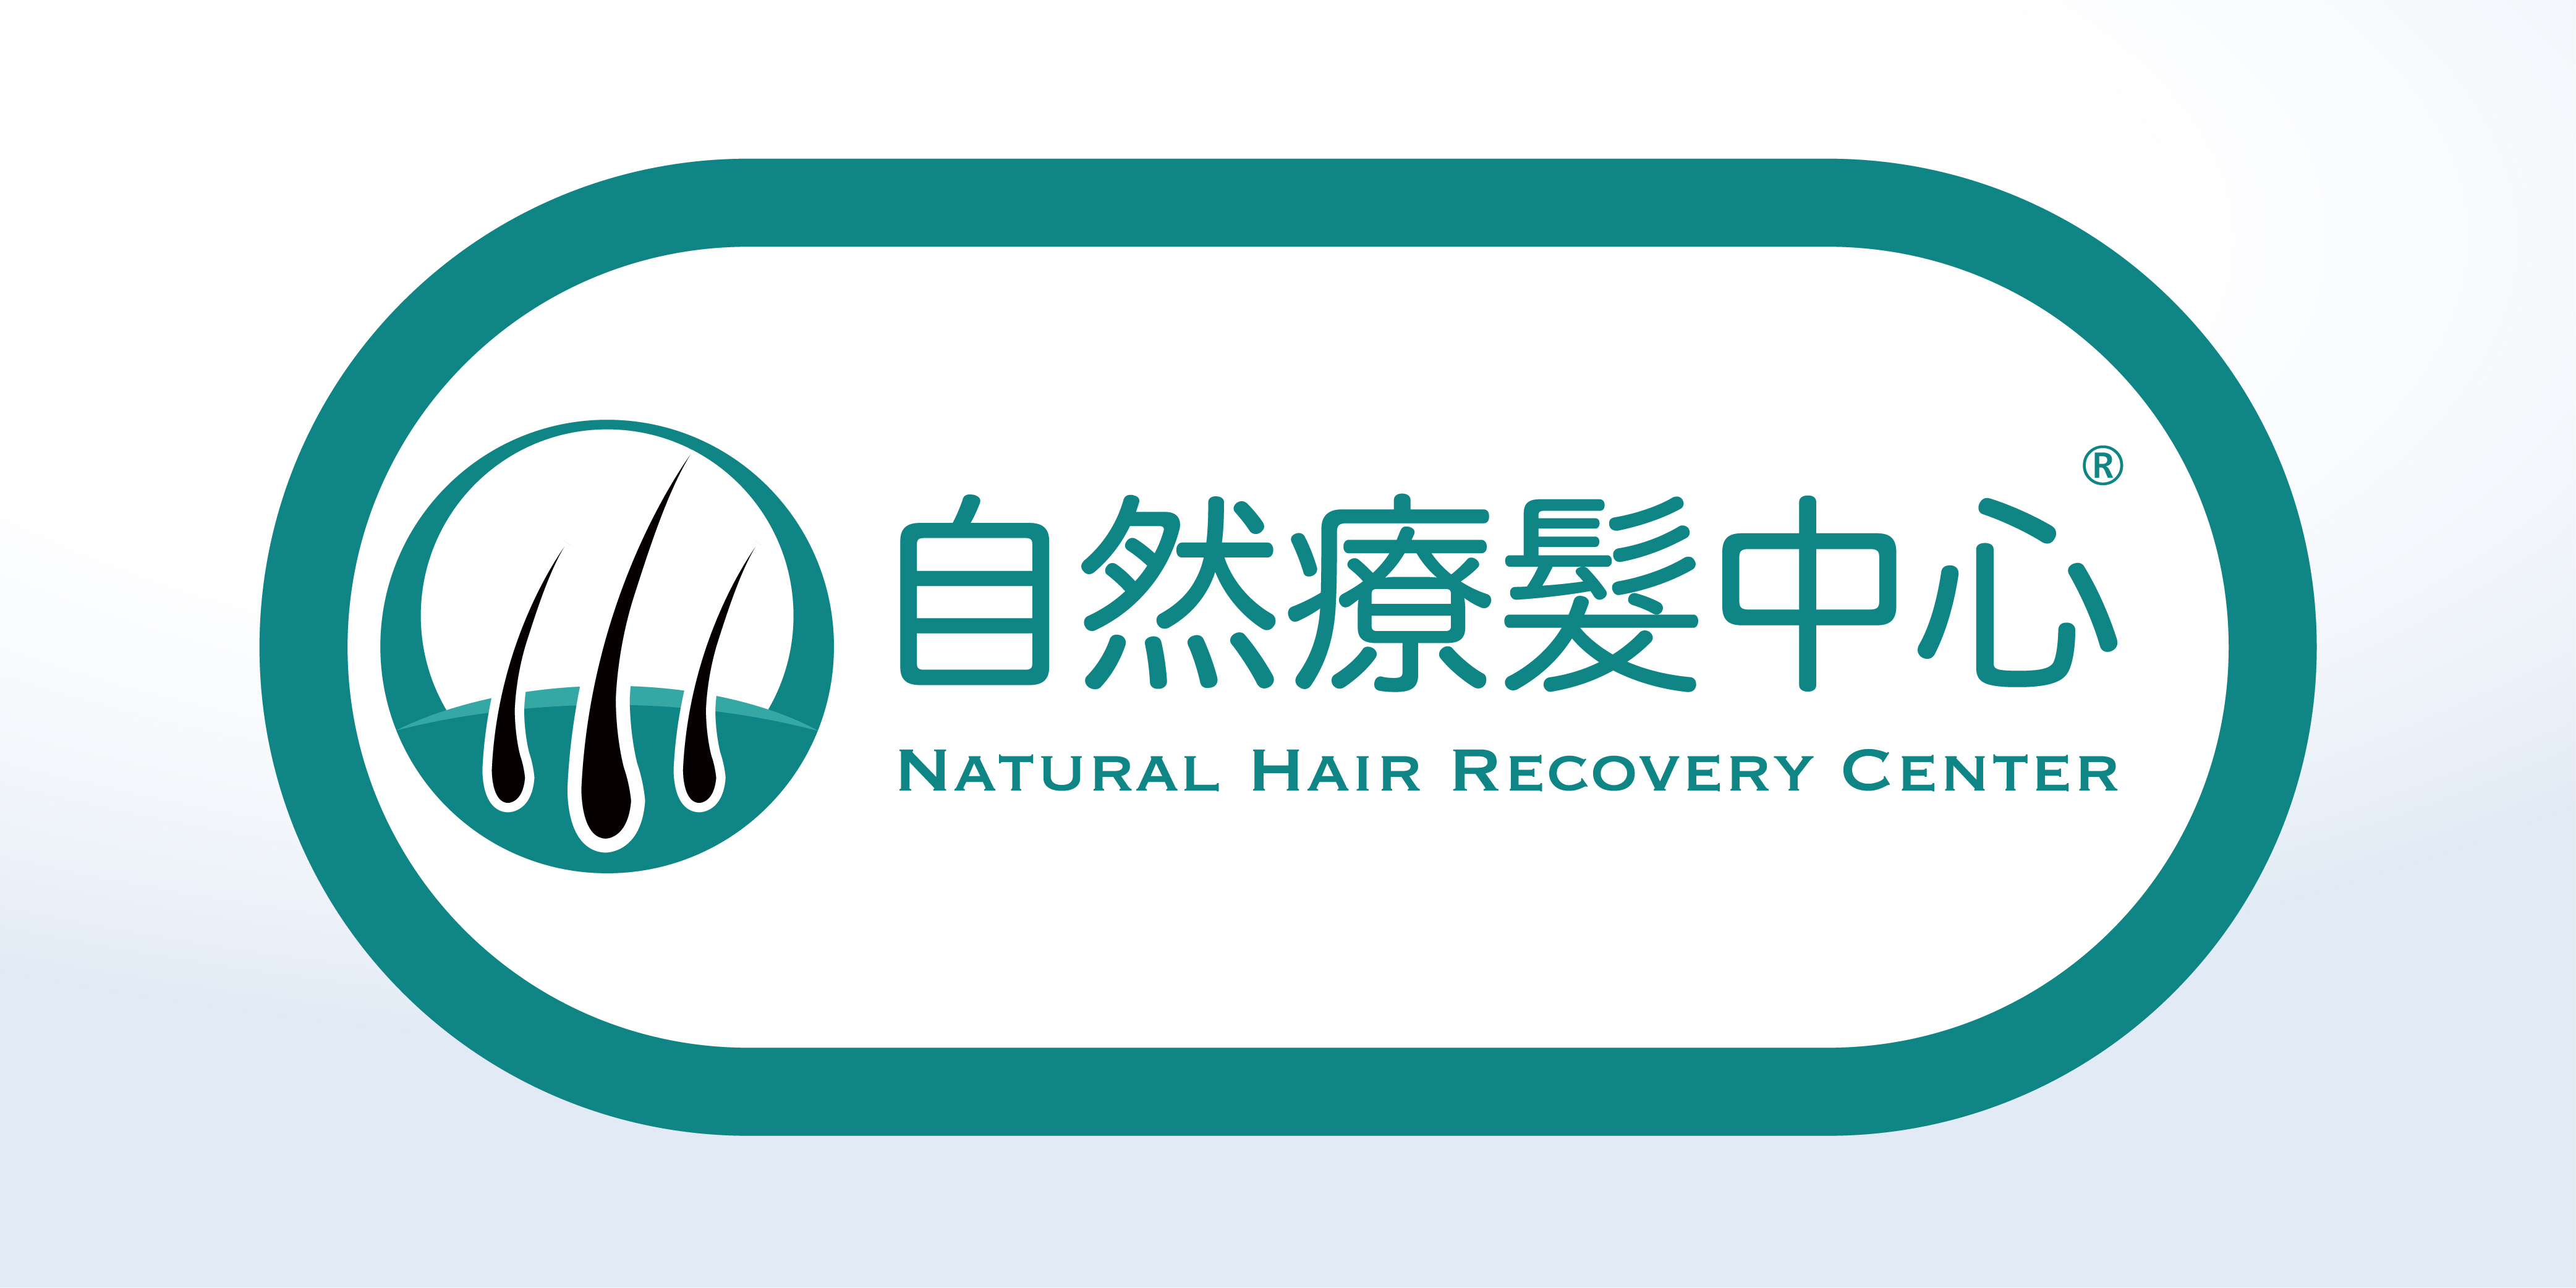 : 自然療髮中心 Natural Hair Recovery Center ®